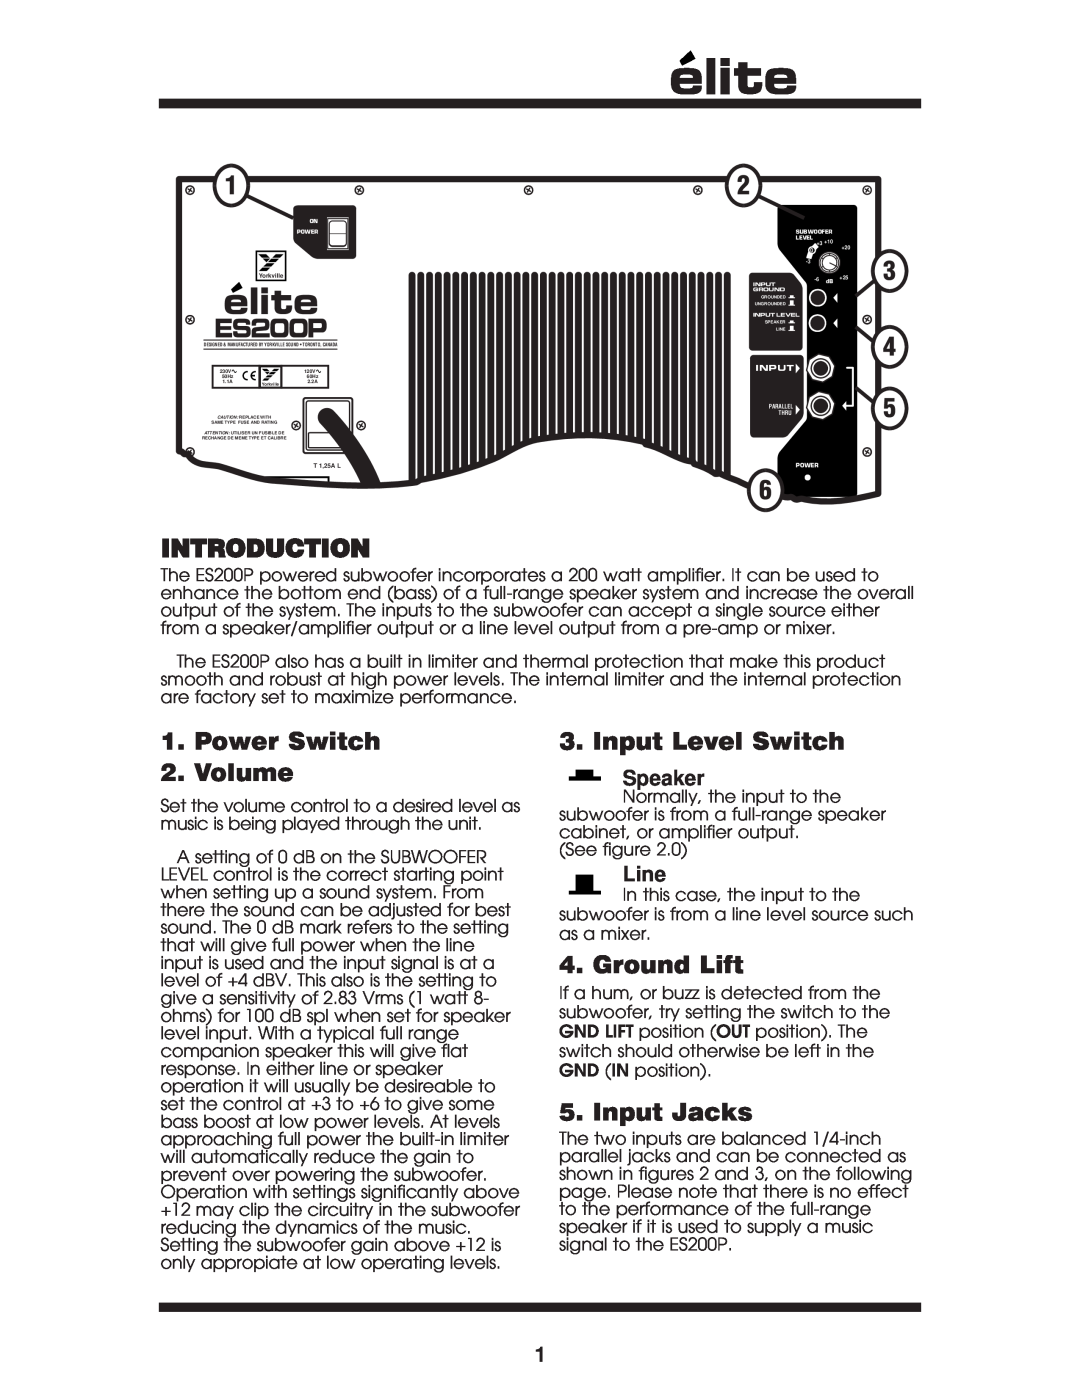 Yorkville Sound ES200P Introduction, Power Switch 2.Volume, Input Level Switch, Ground Lift, Input Jacks, Speaker, Line 